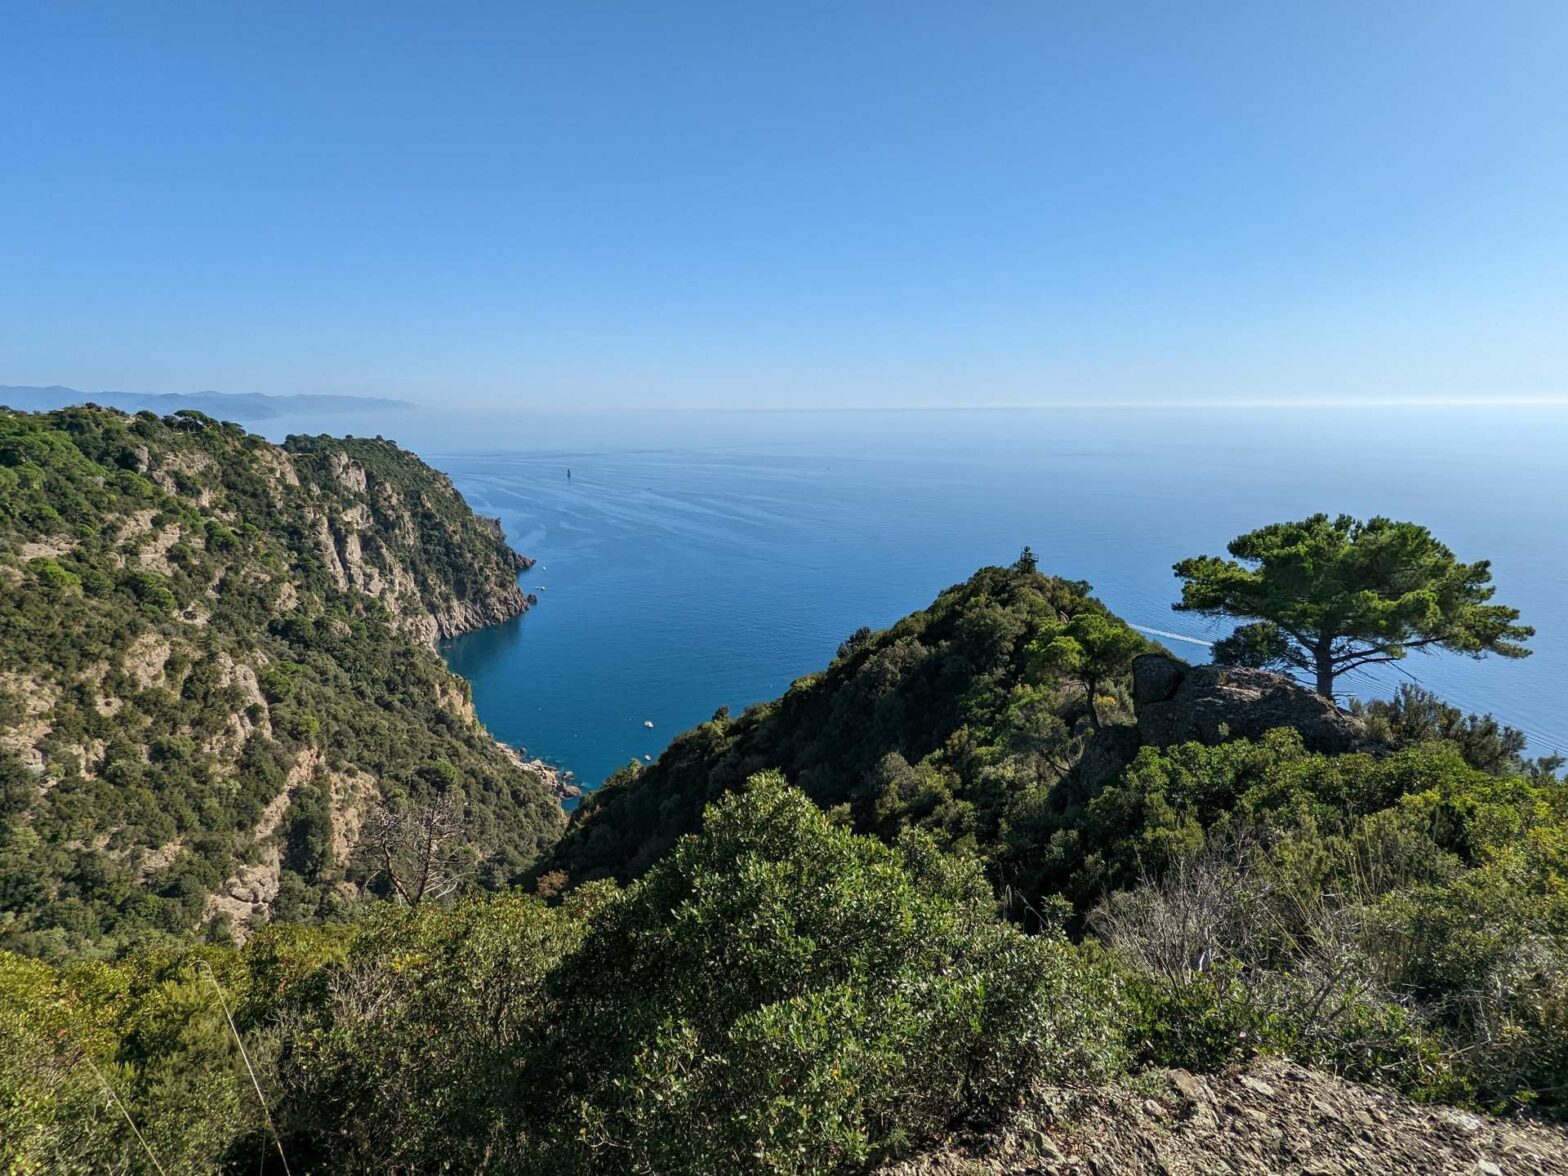 Hiking from San Frutuossa to Portofino in Italy